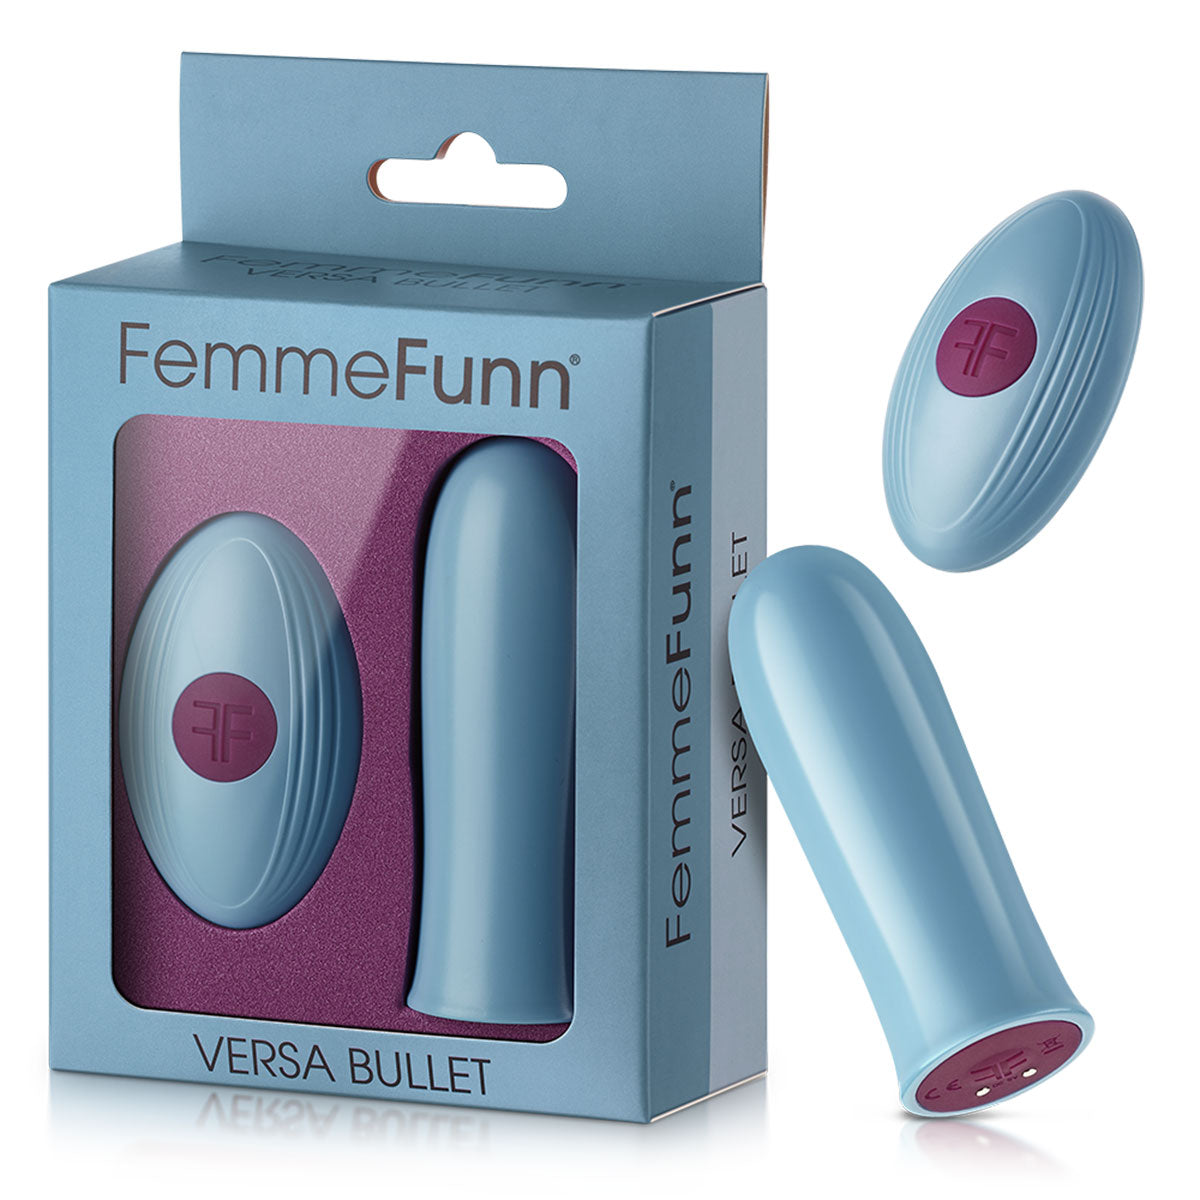 Femme Funn Versa Bullet and Remote - Aqua